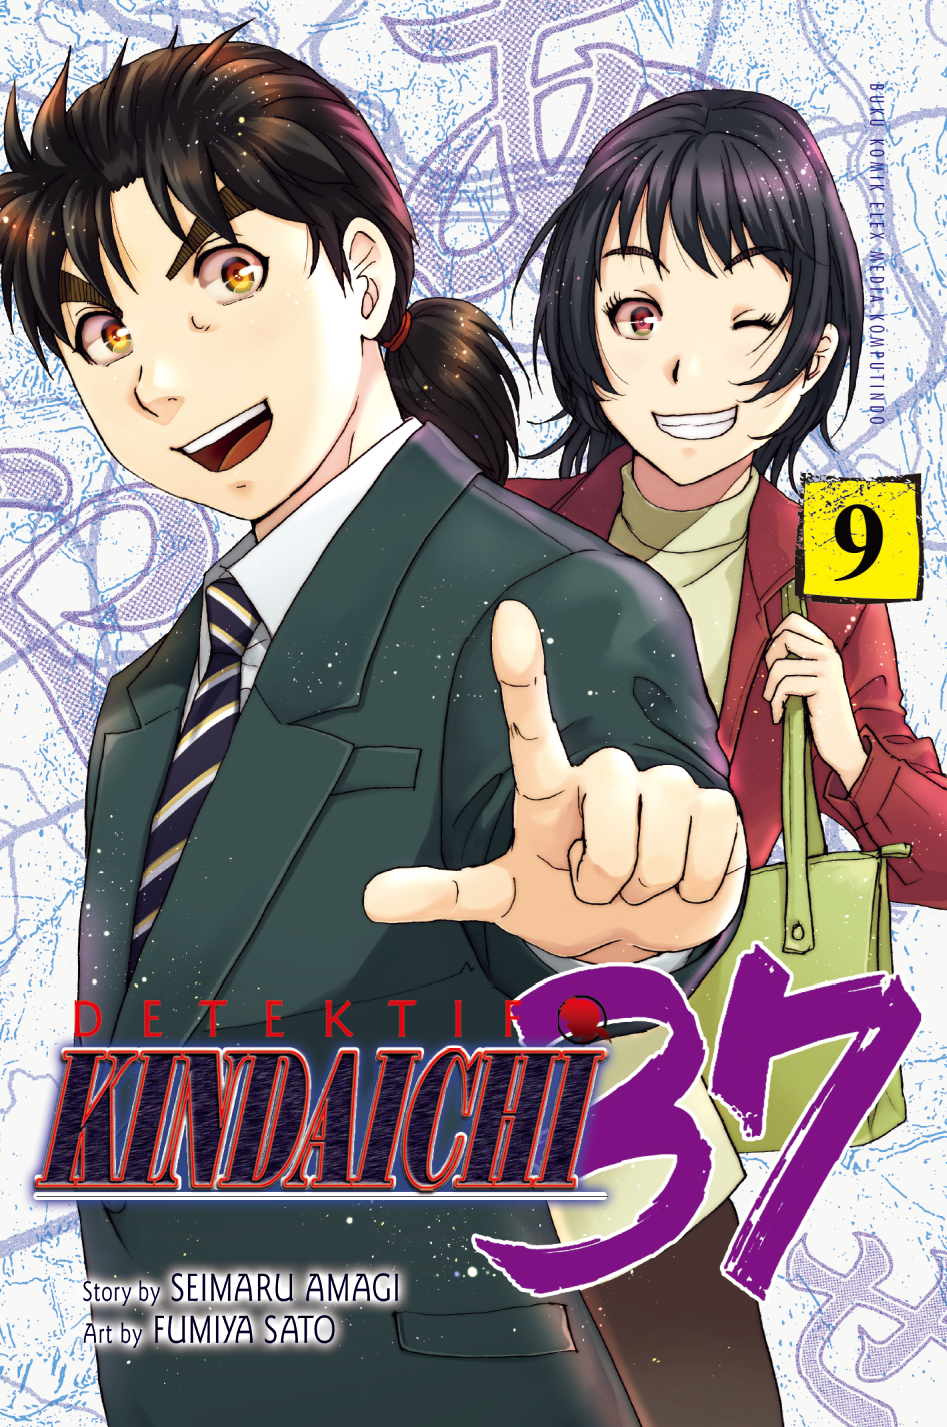 Detektif kindaichi 37 vol. 9